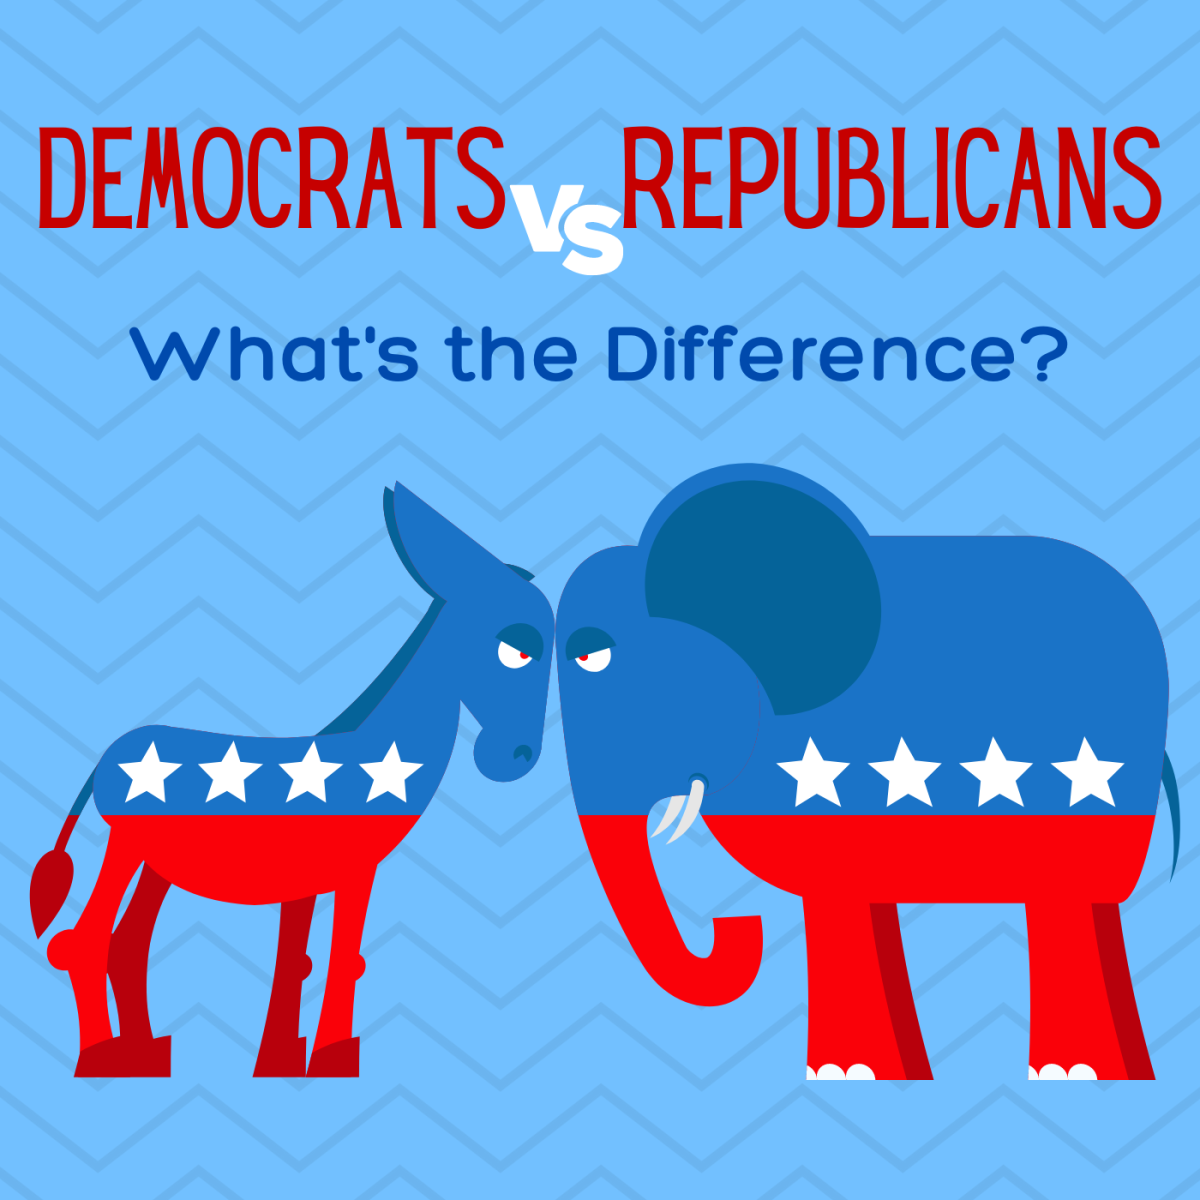 15 Differences Between Democrats and Republicans